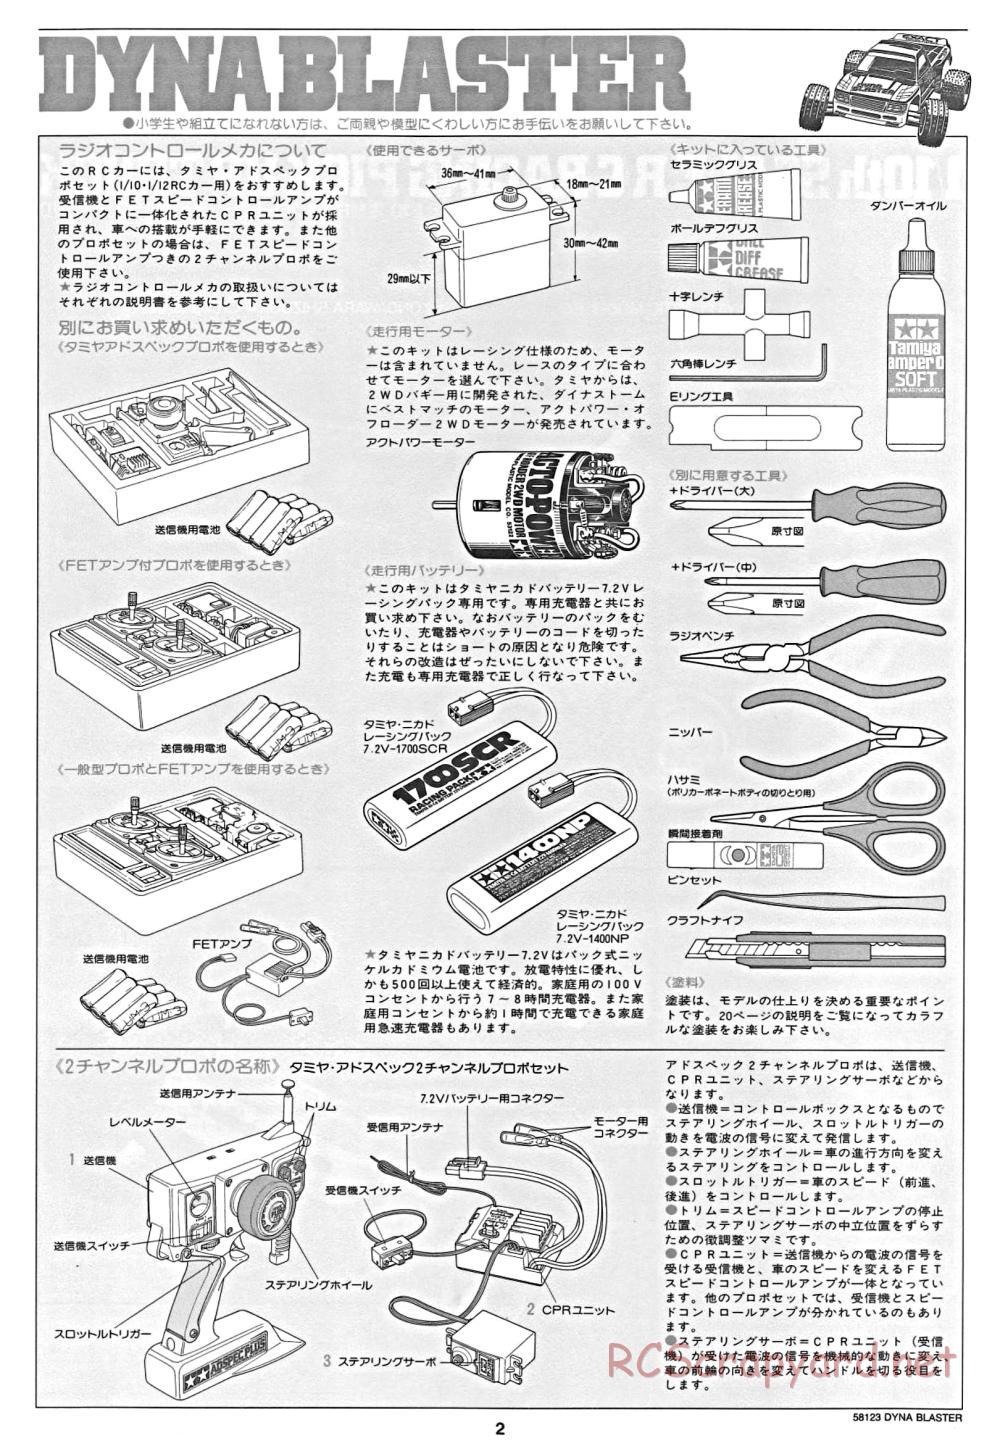 Tamiya - Dyna Blaster Chassis - Manual - Page 2